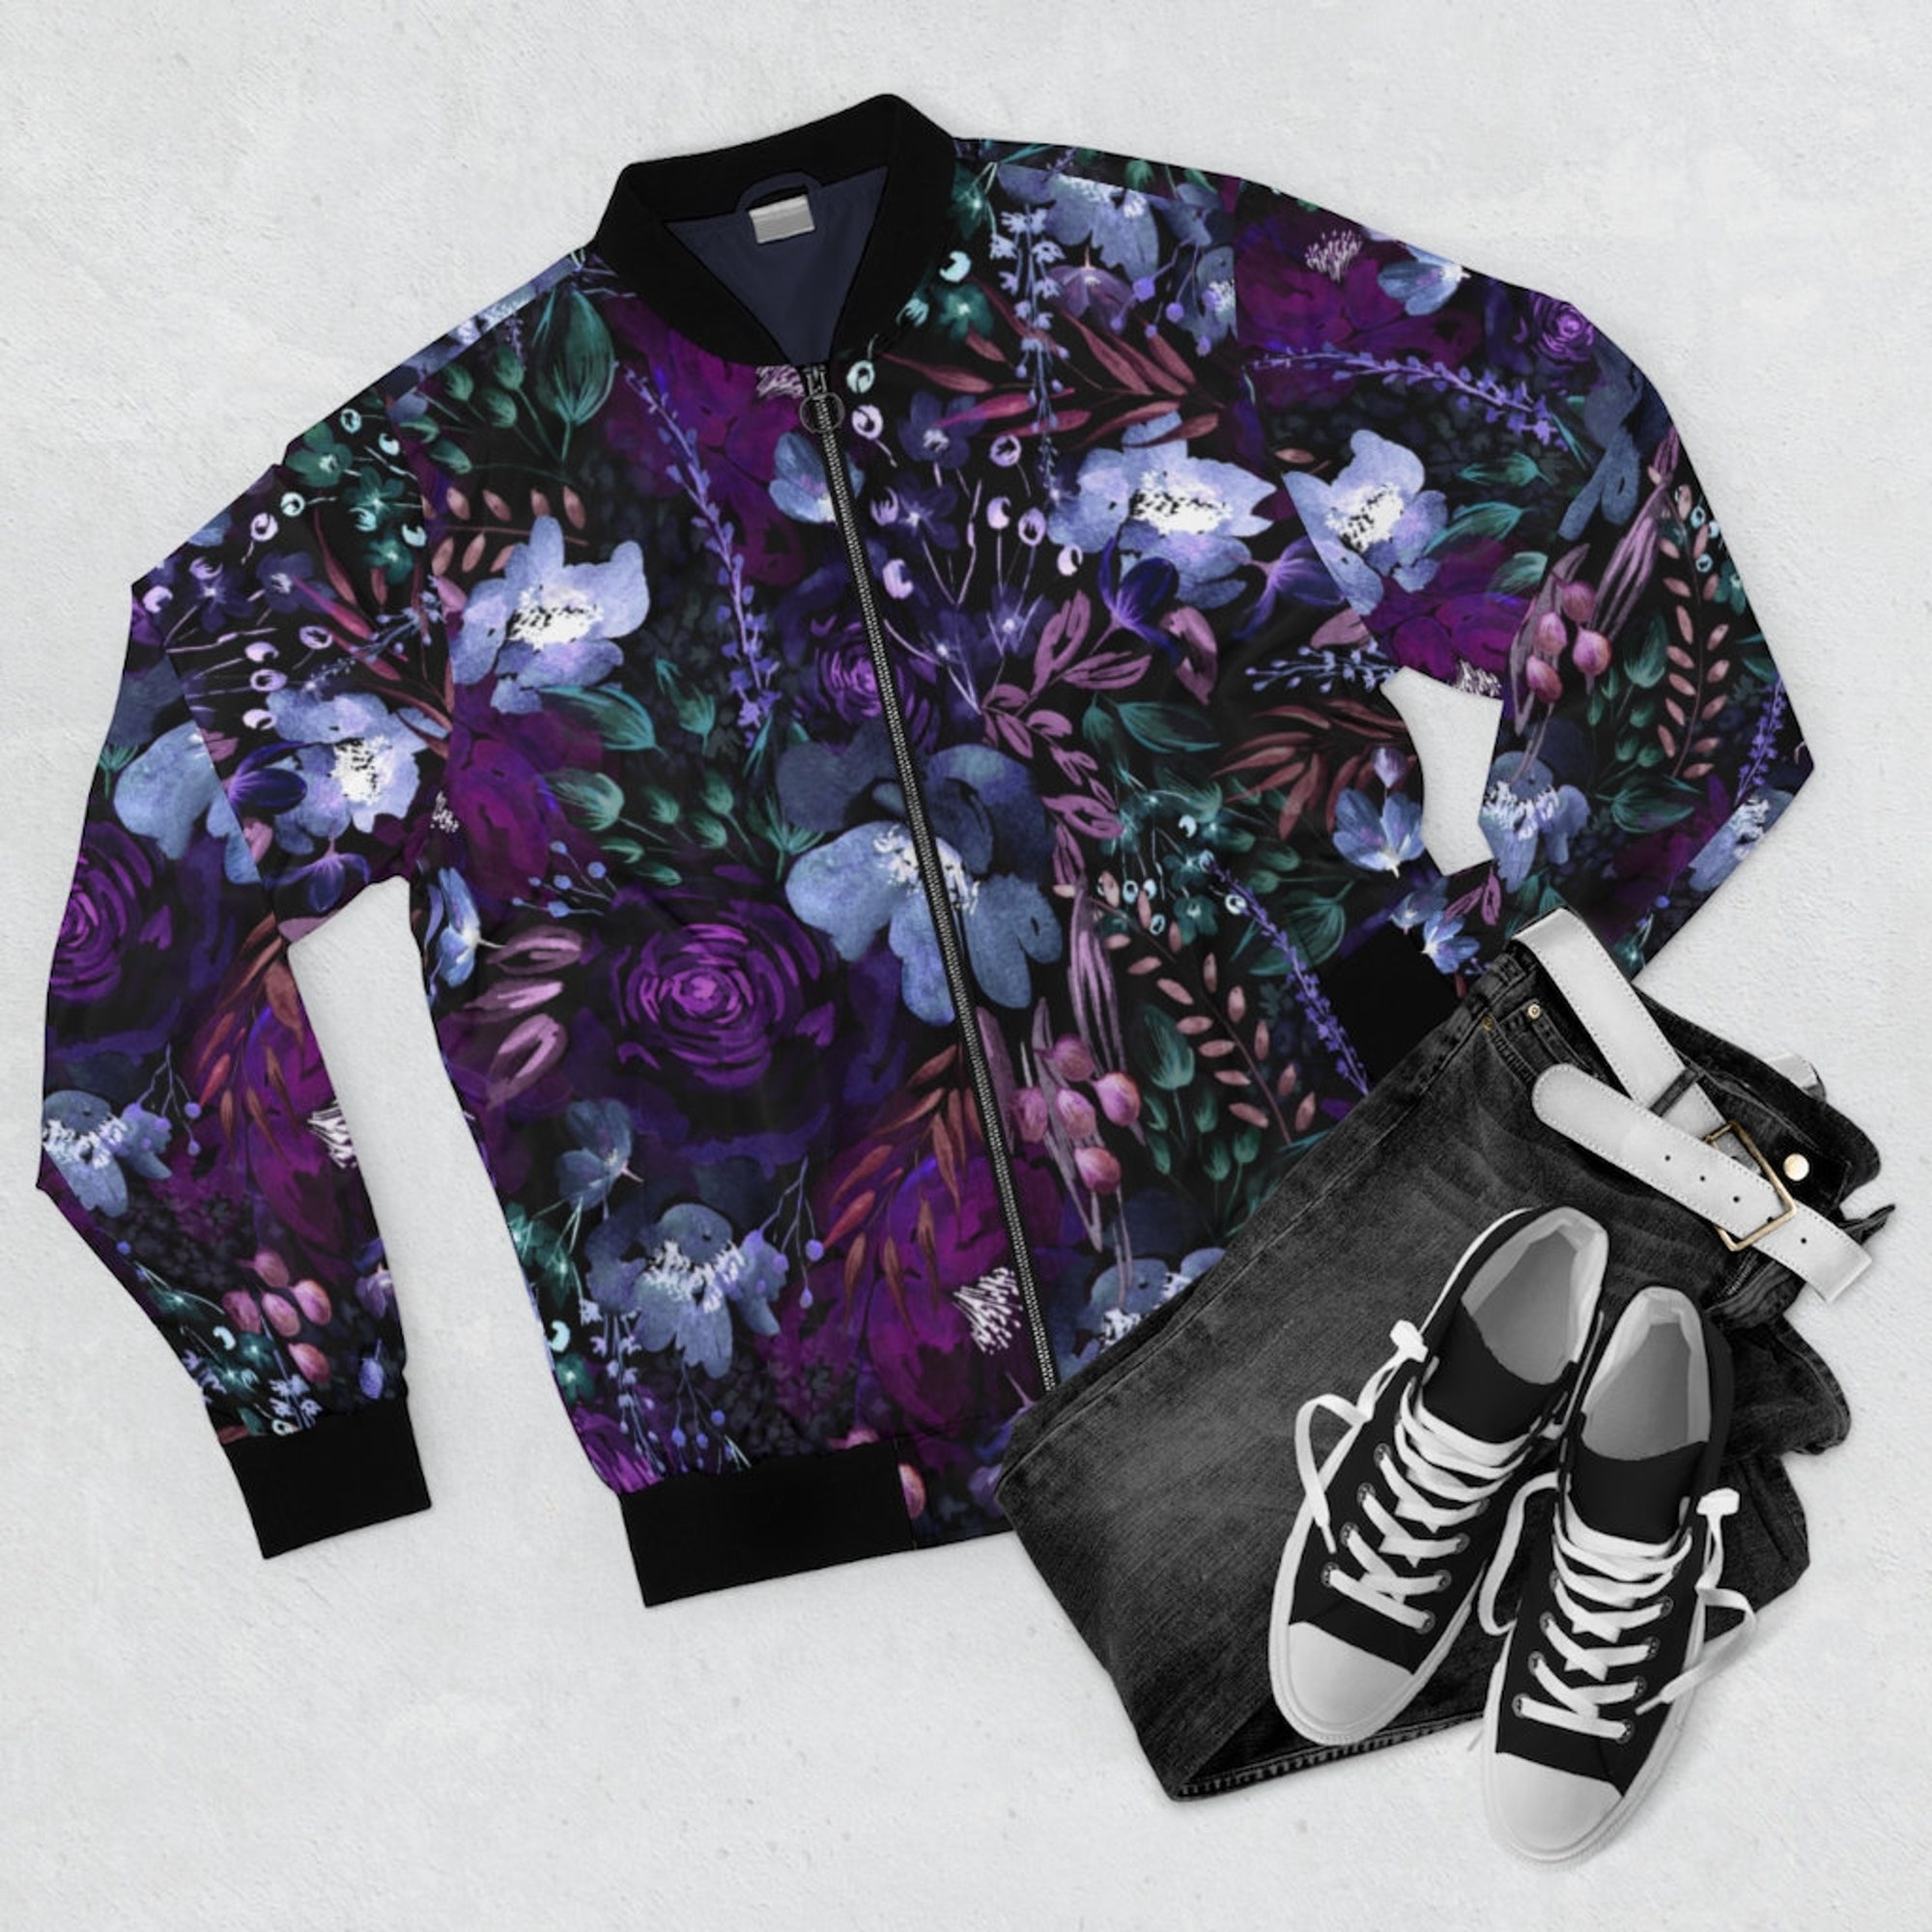 Bue Floral Bomber Jacket Unisex Black clothing Floral pattern Violet Flowers Fashion